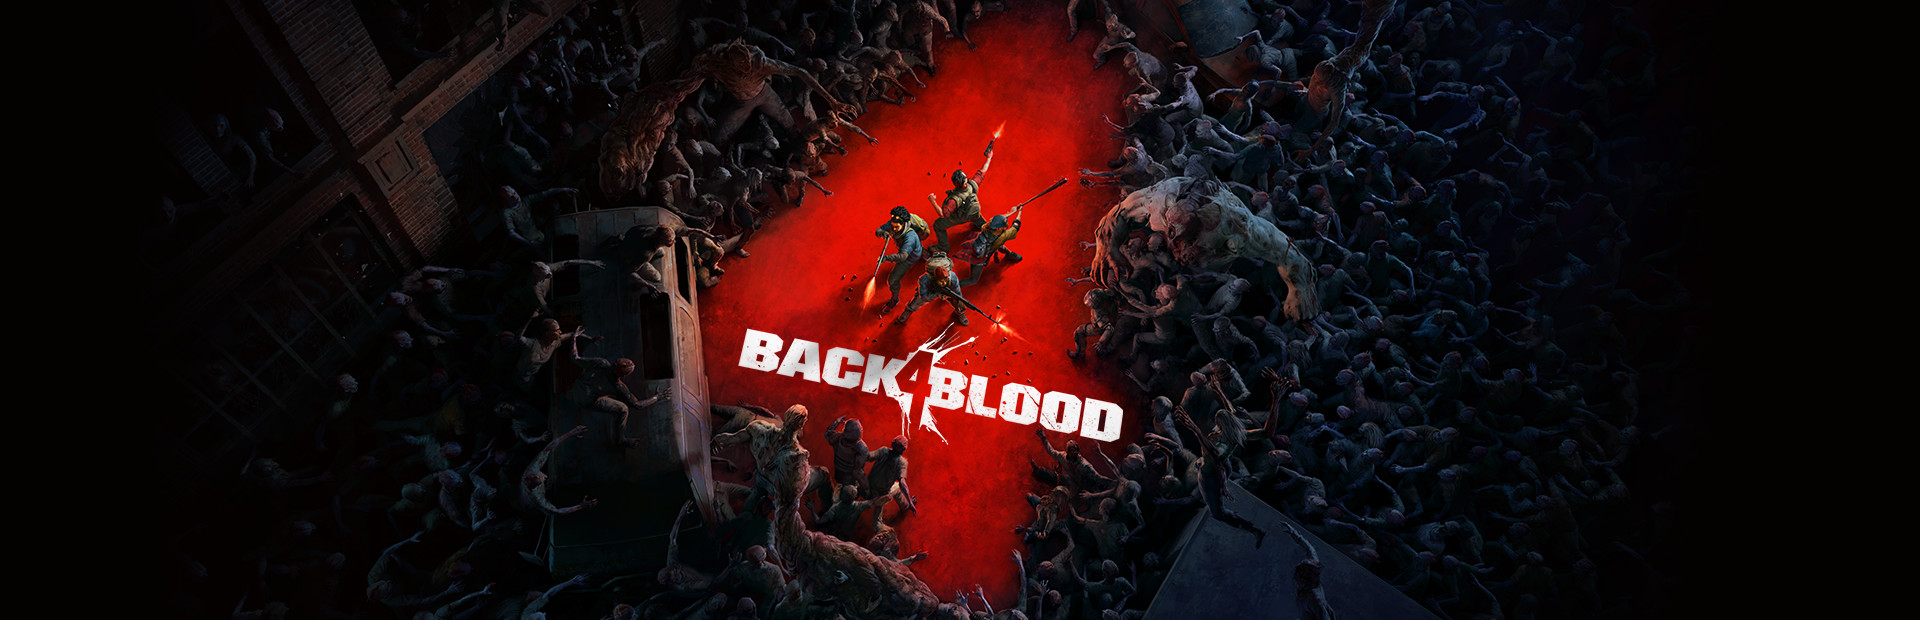 Back 4 Blood cover image